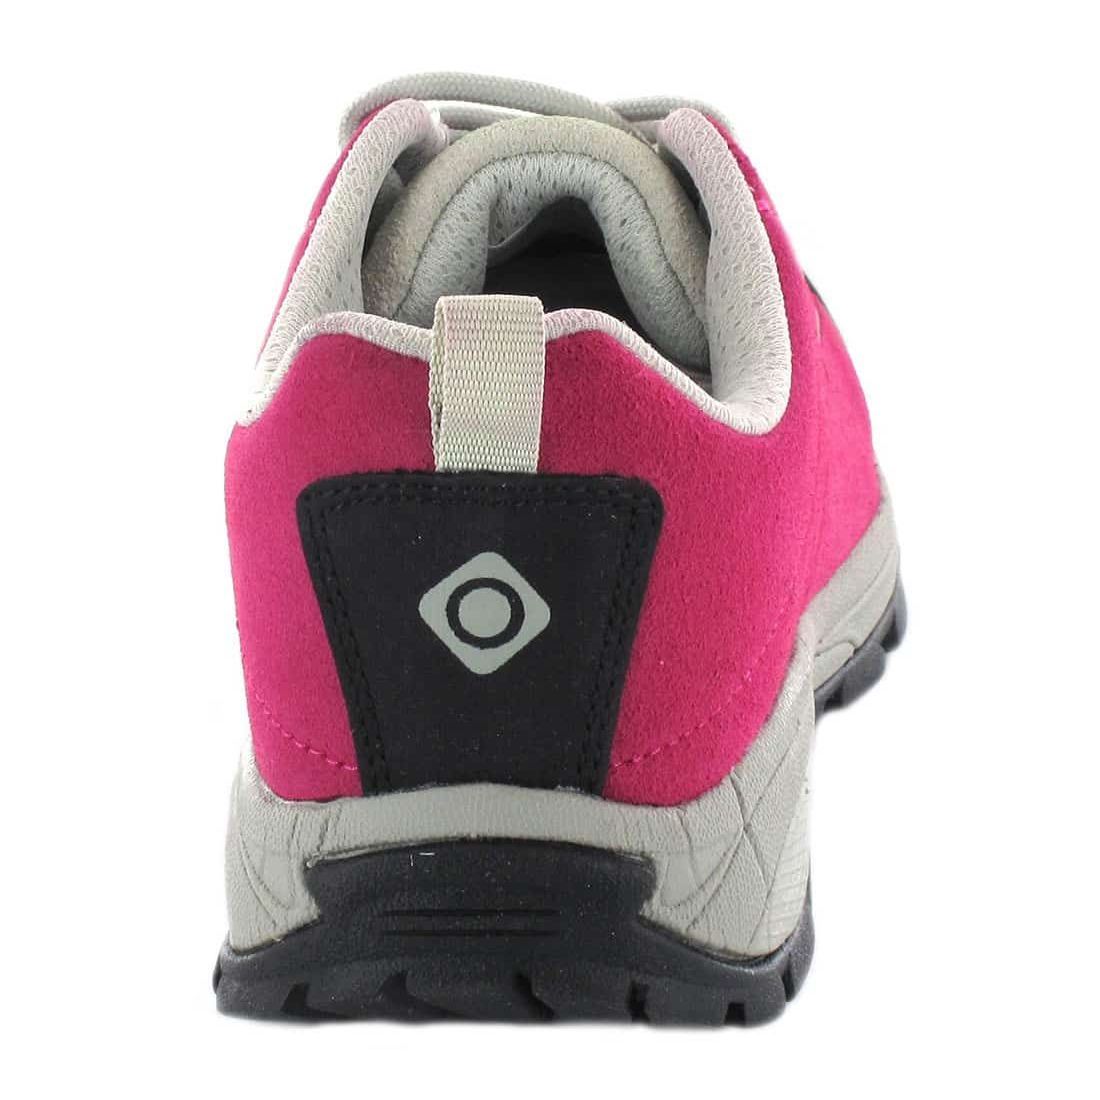 Zapatillas Trekking Mujer - Izas Zorge Pink fucsia Calzado Montaña